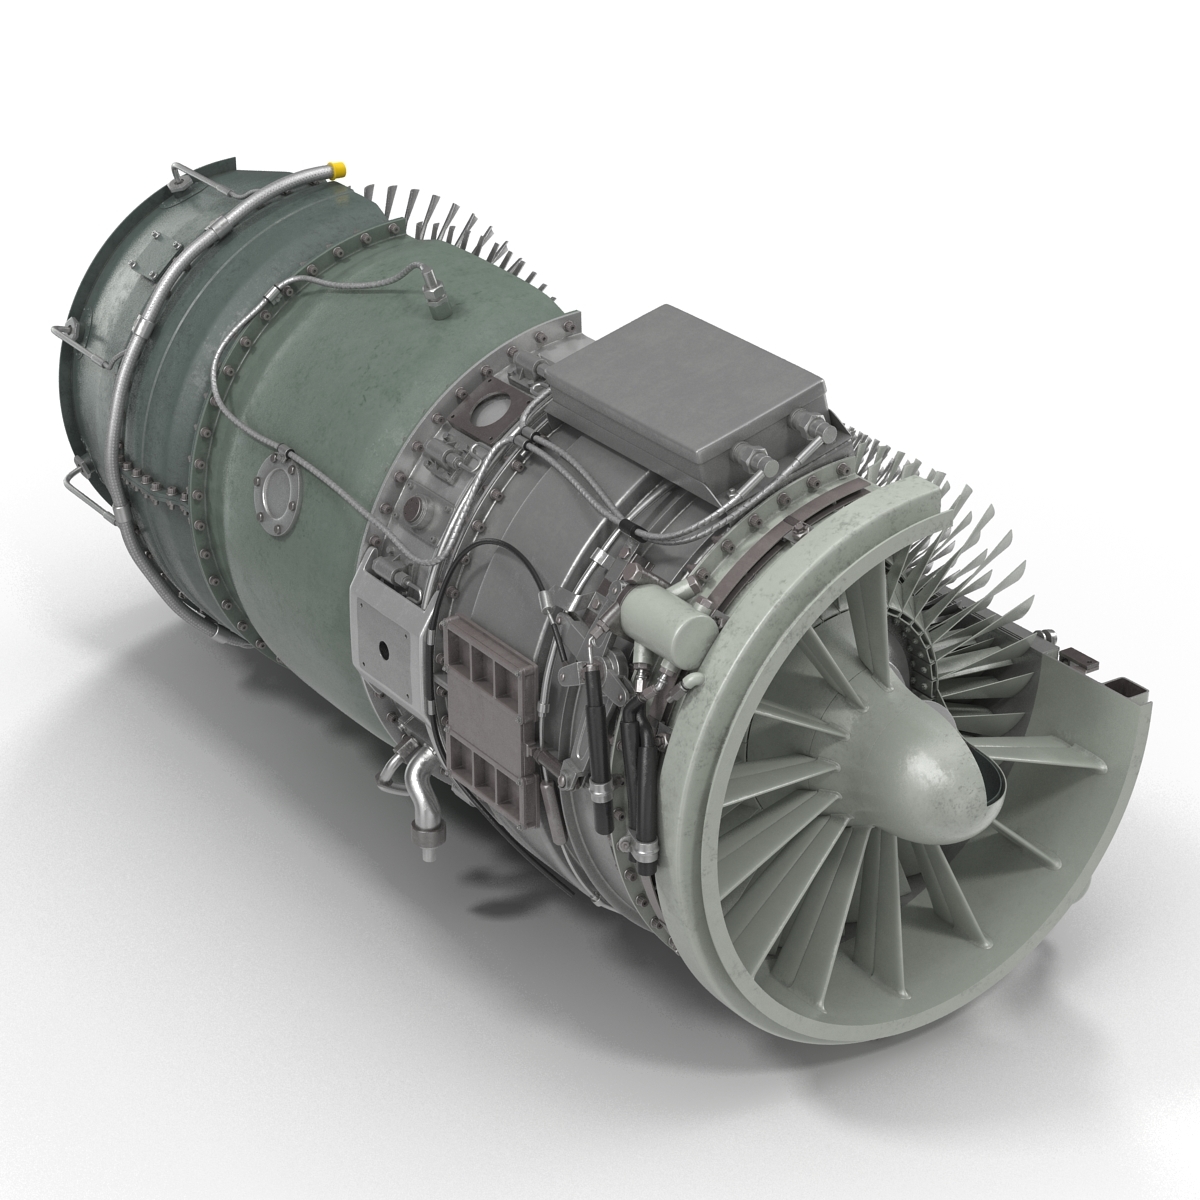 Turbojet Engine Sectioned 3D ModelTurbojet Engine Sectioned 3D Model